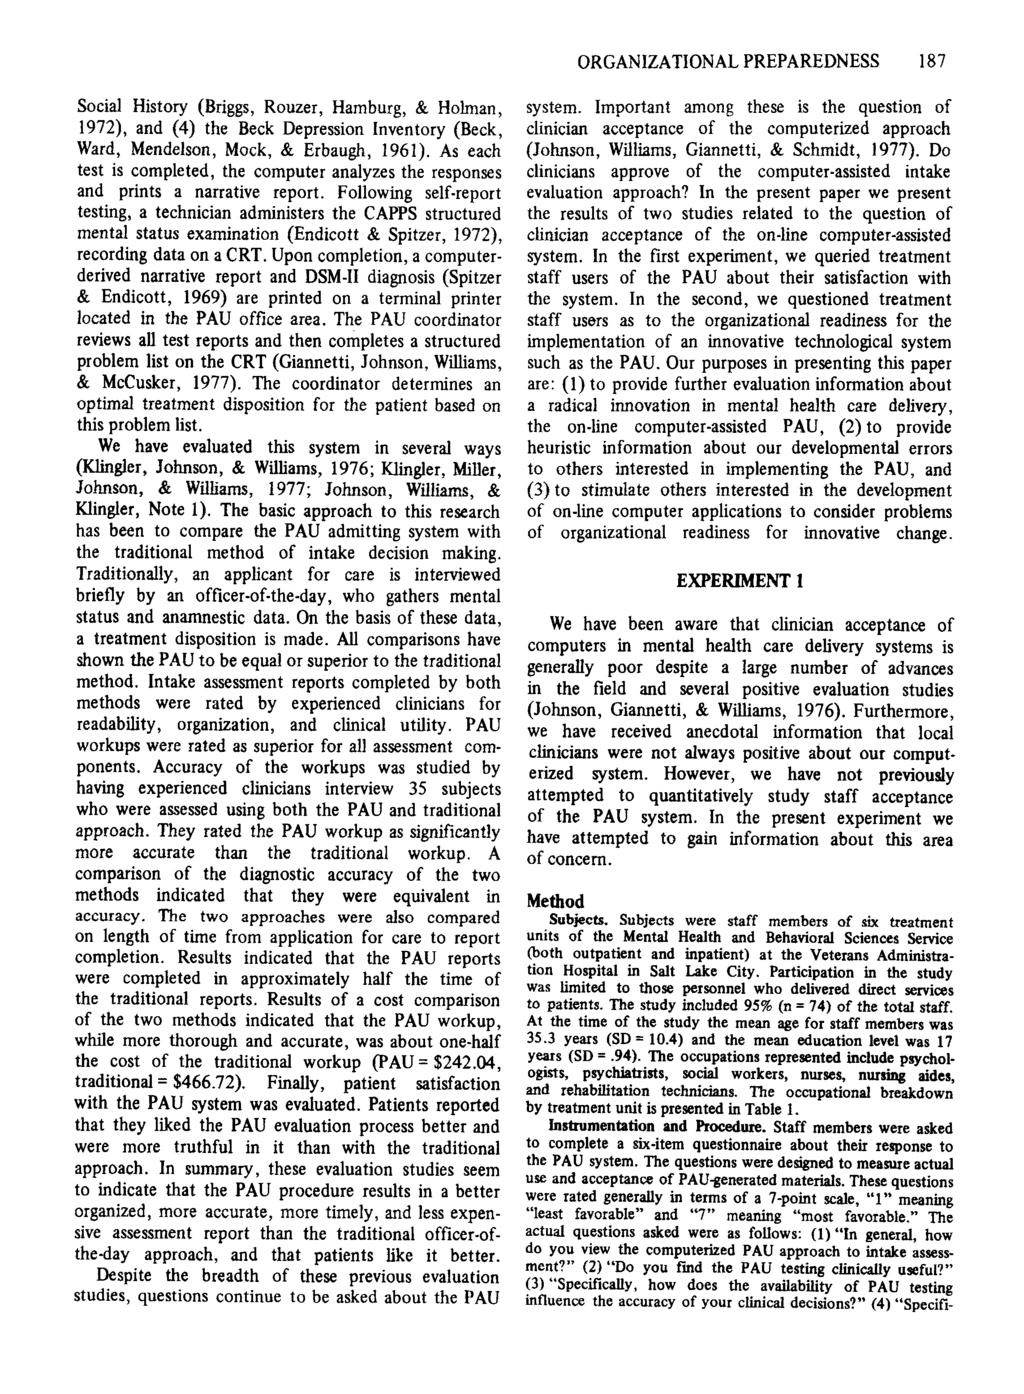 ORGANIZATIONAL PREPAREDNESS 187 Social History (Briggs, Rouzer, Hamburg, & Holman, 1972), and (4) the Beck Depression Inventory (Beck, Ward, Mendelson, Mock, & Erbaugh, 1961).